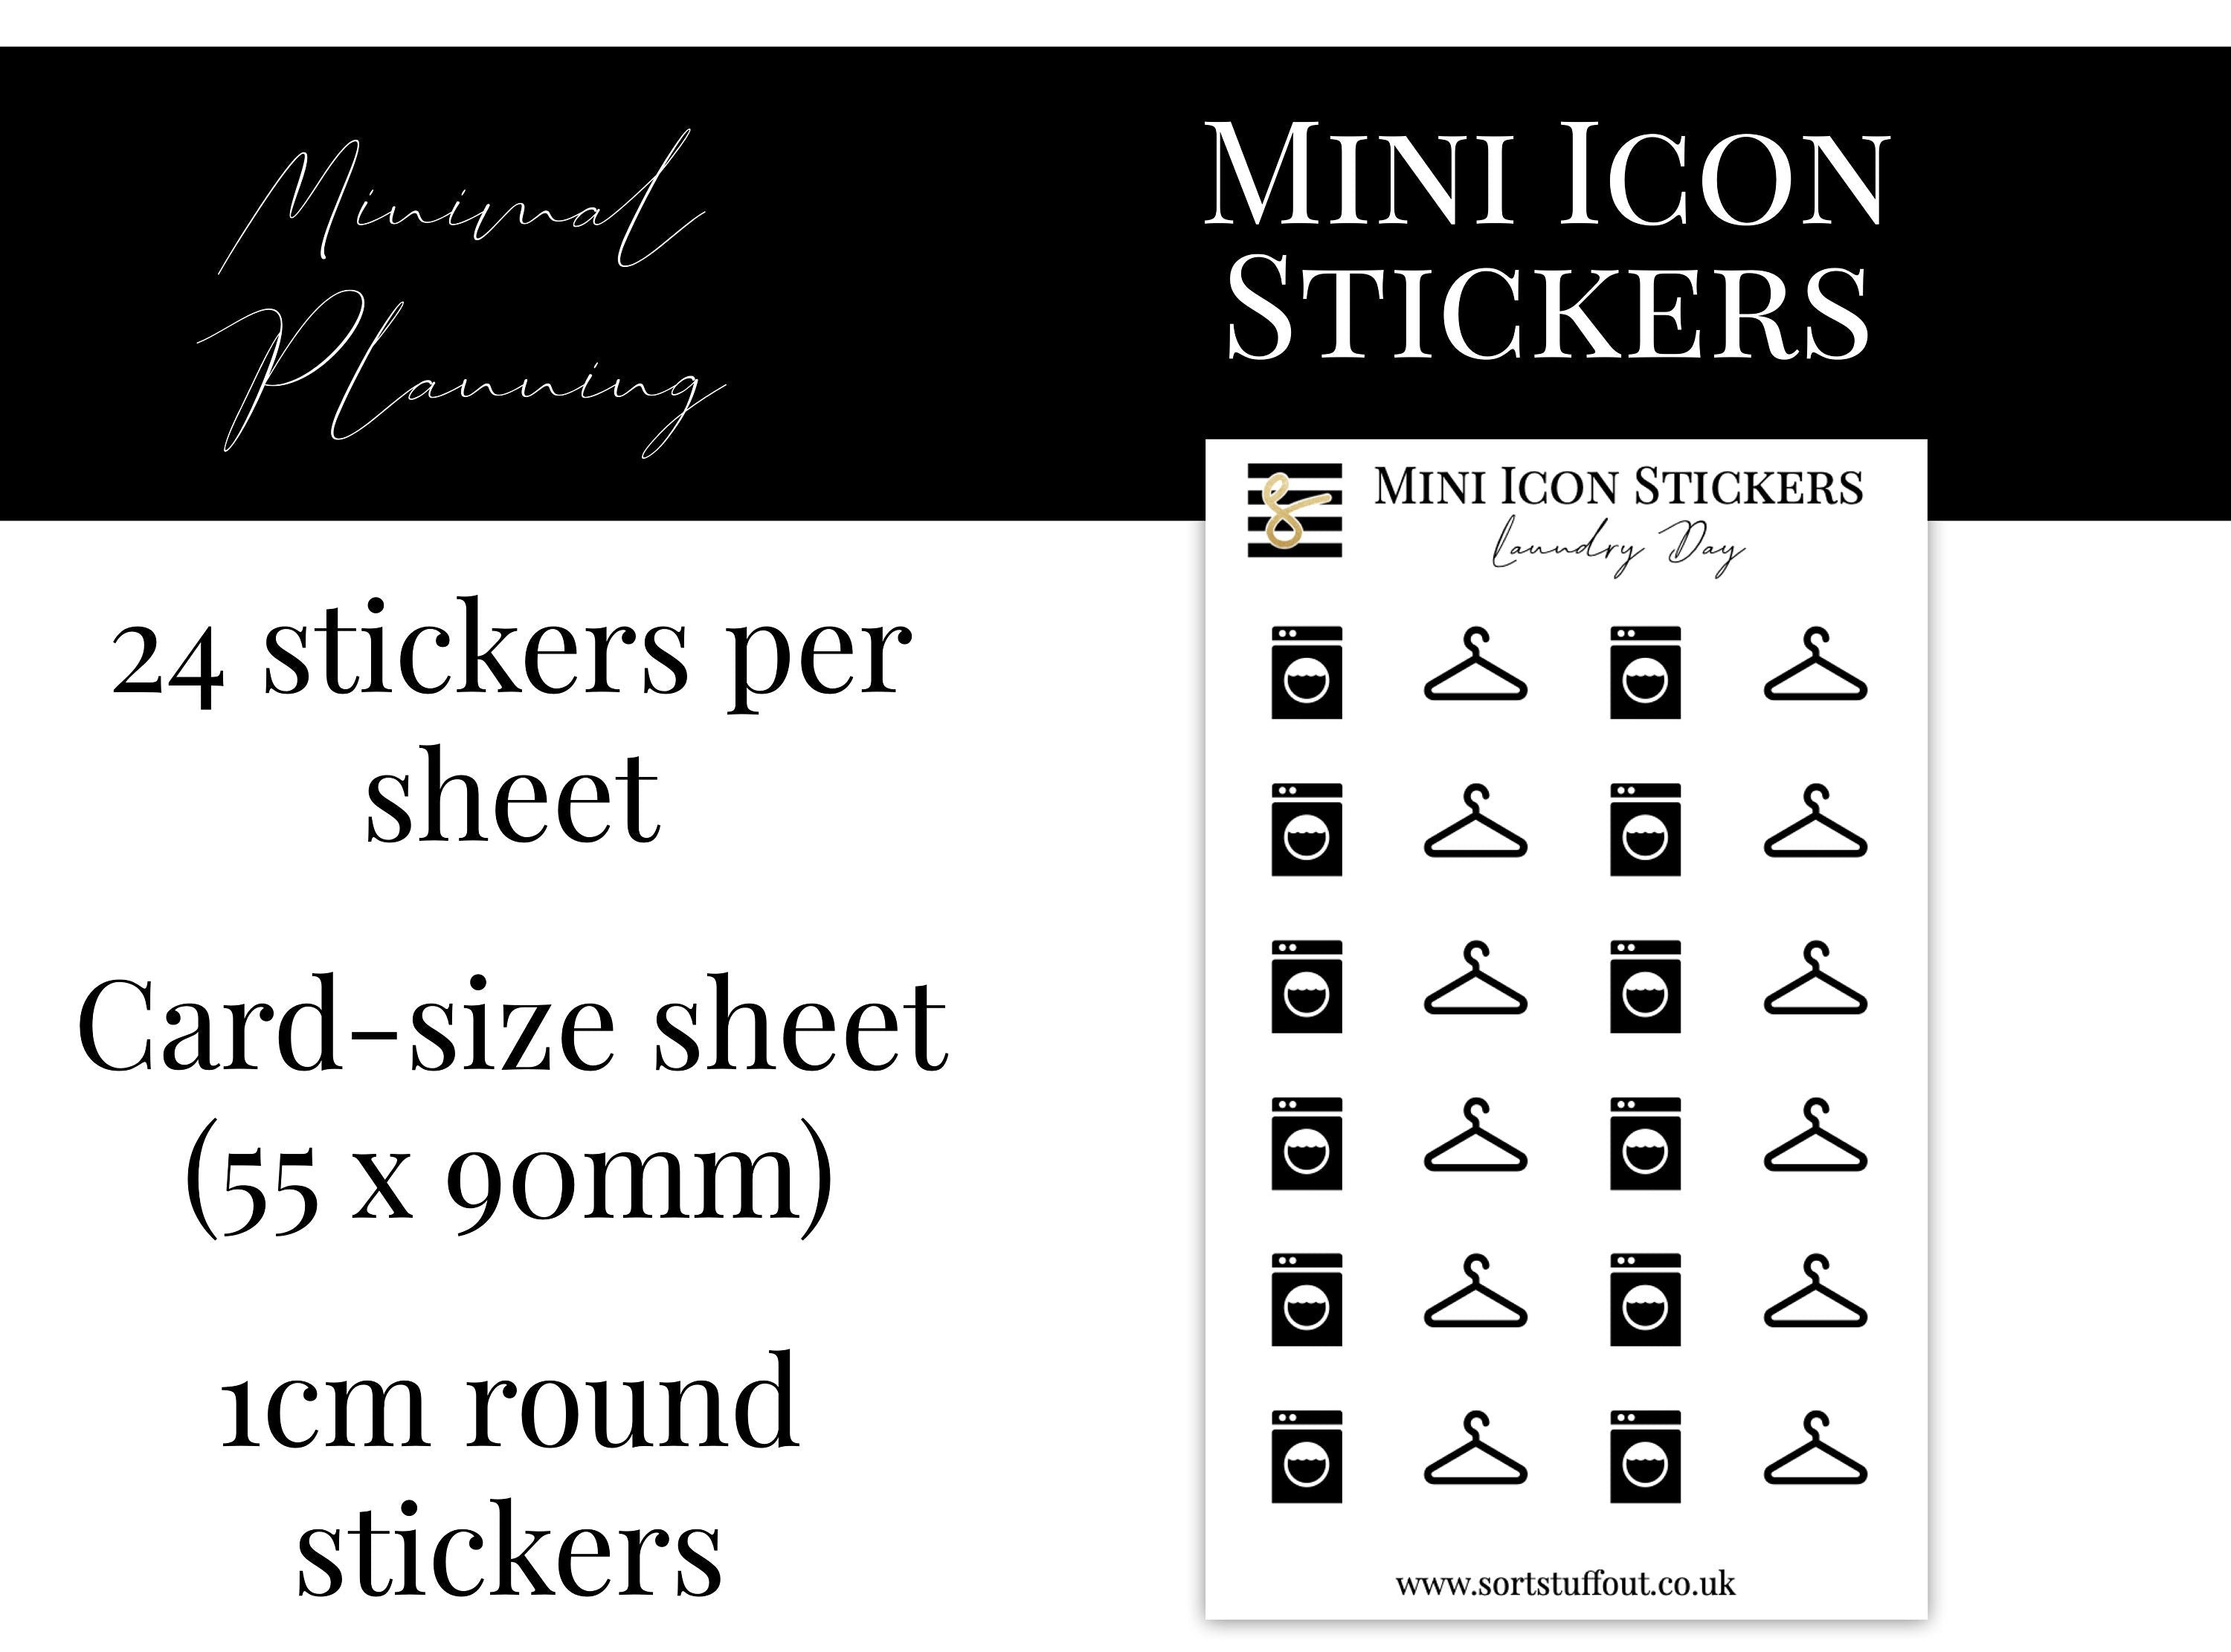 Mini Icon Stickers - Laundry Day